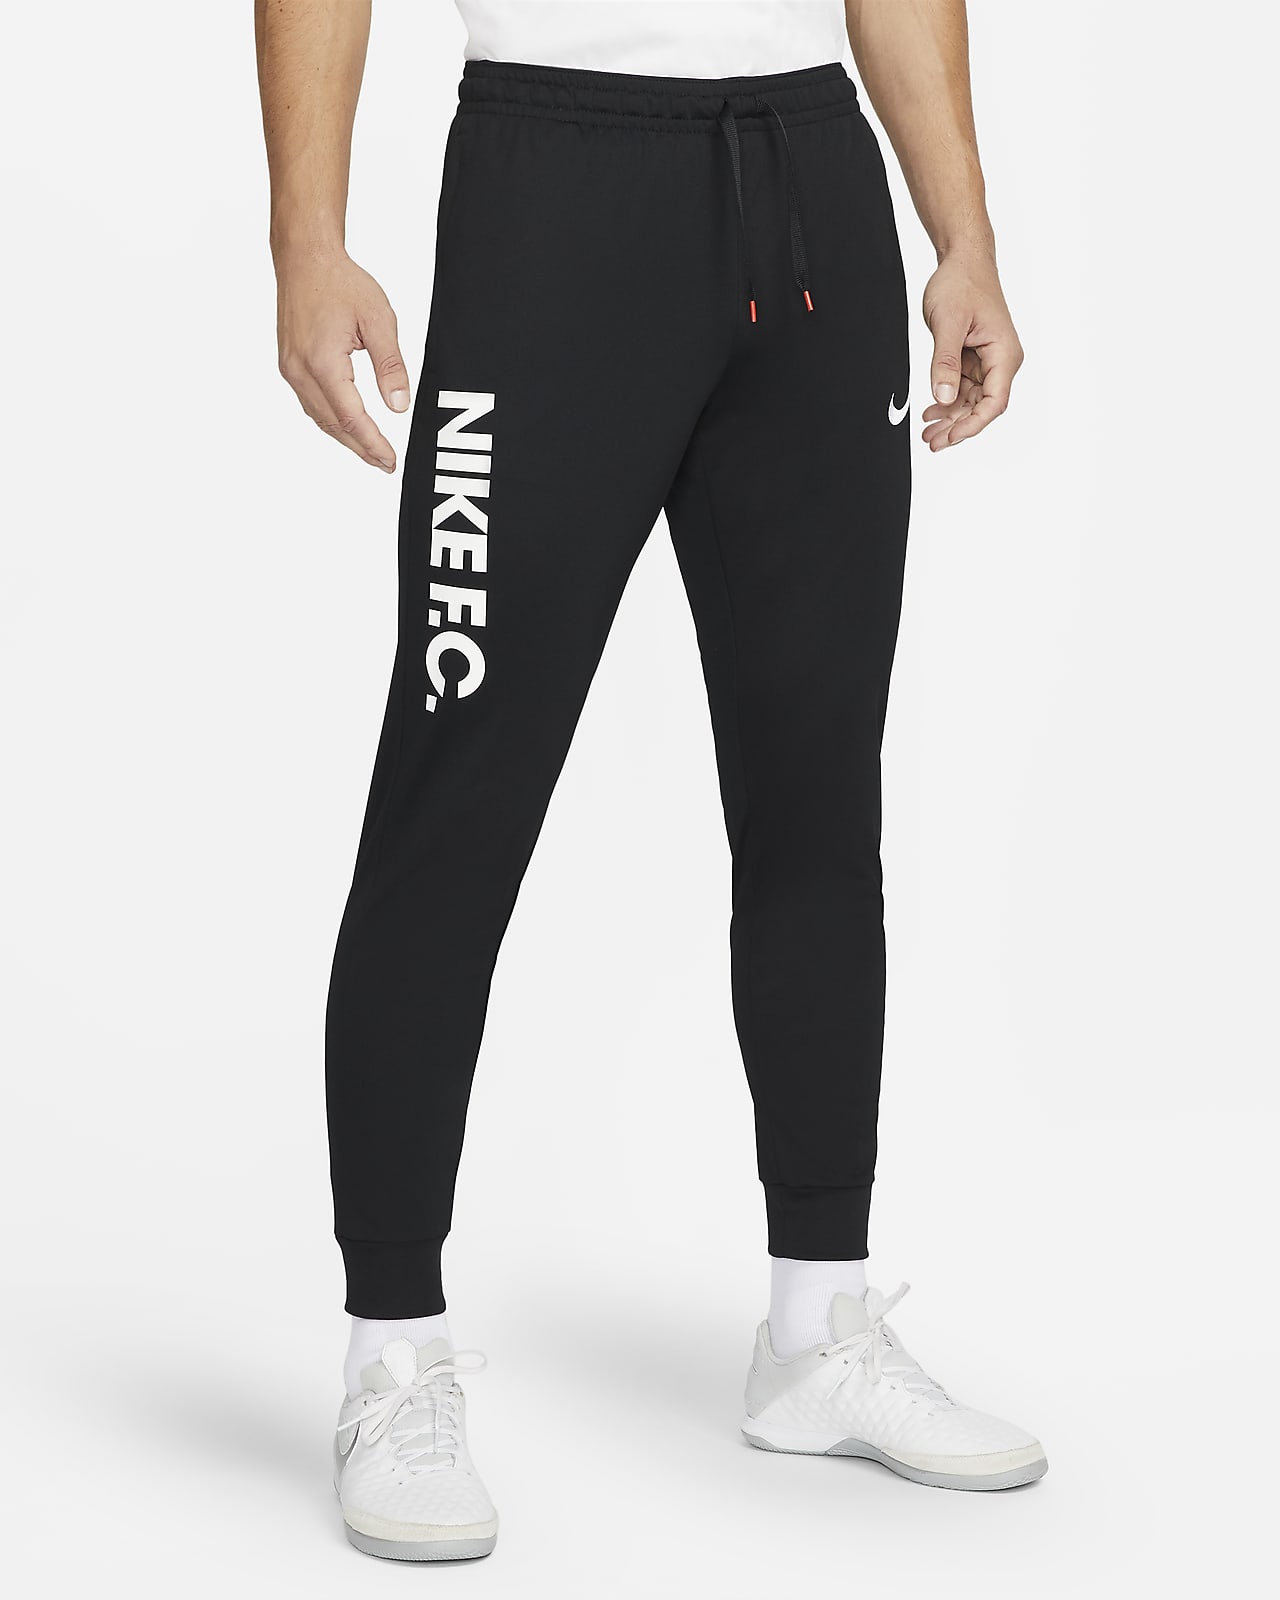 F.C. Dri-FIT Men's Knit Soccer Pants. Nike.com